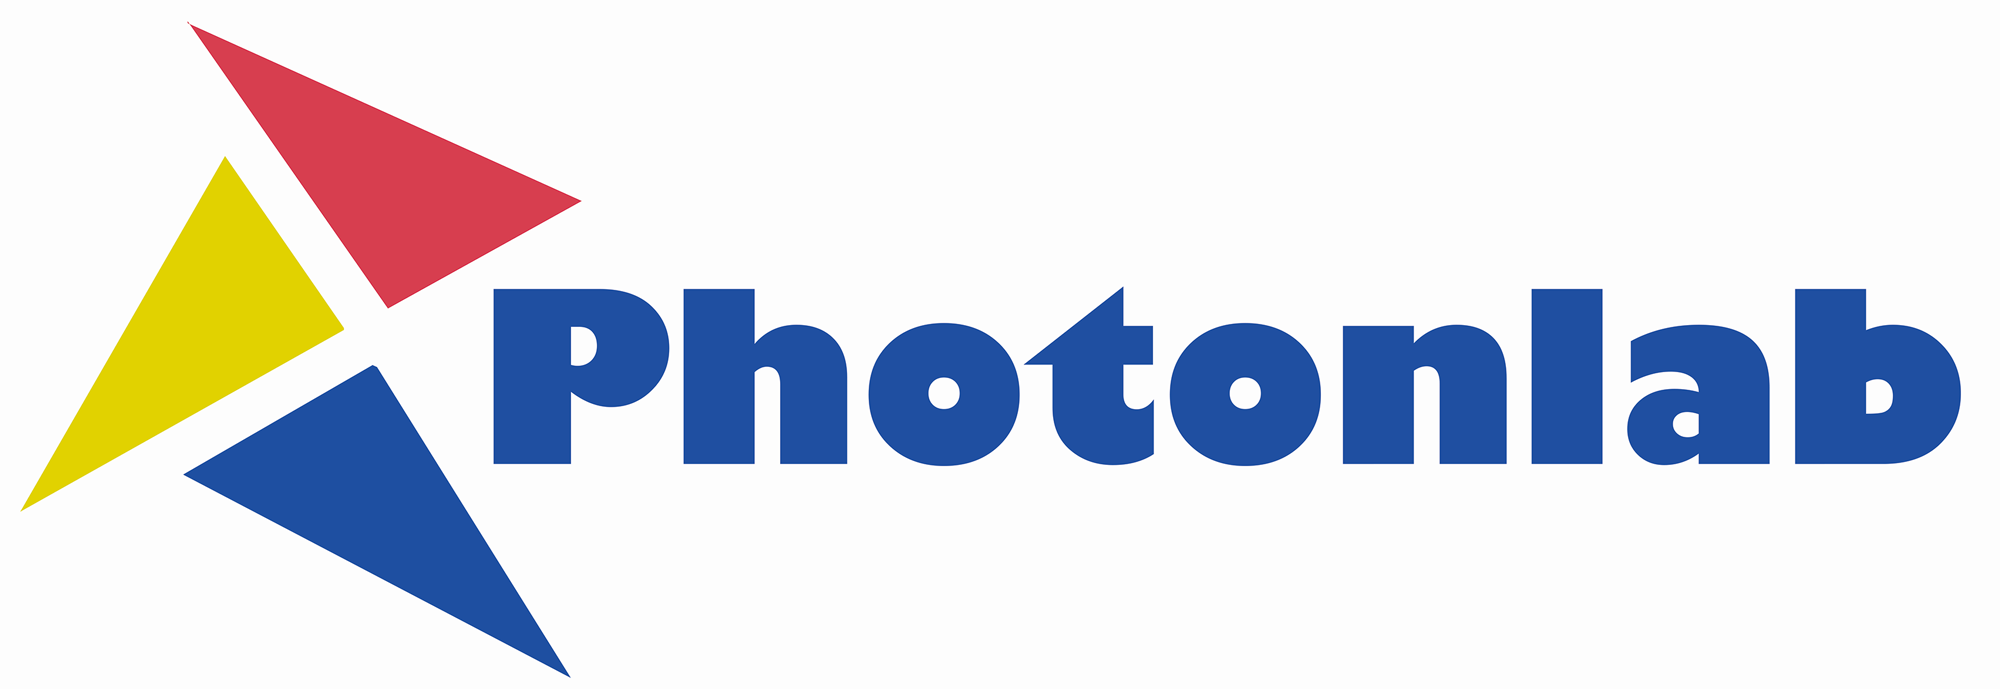 Photonlab Instruments GmbH